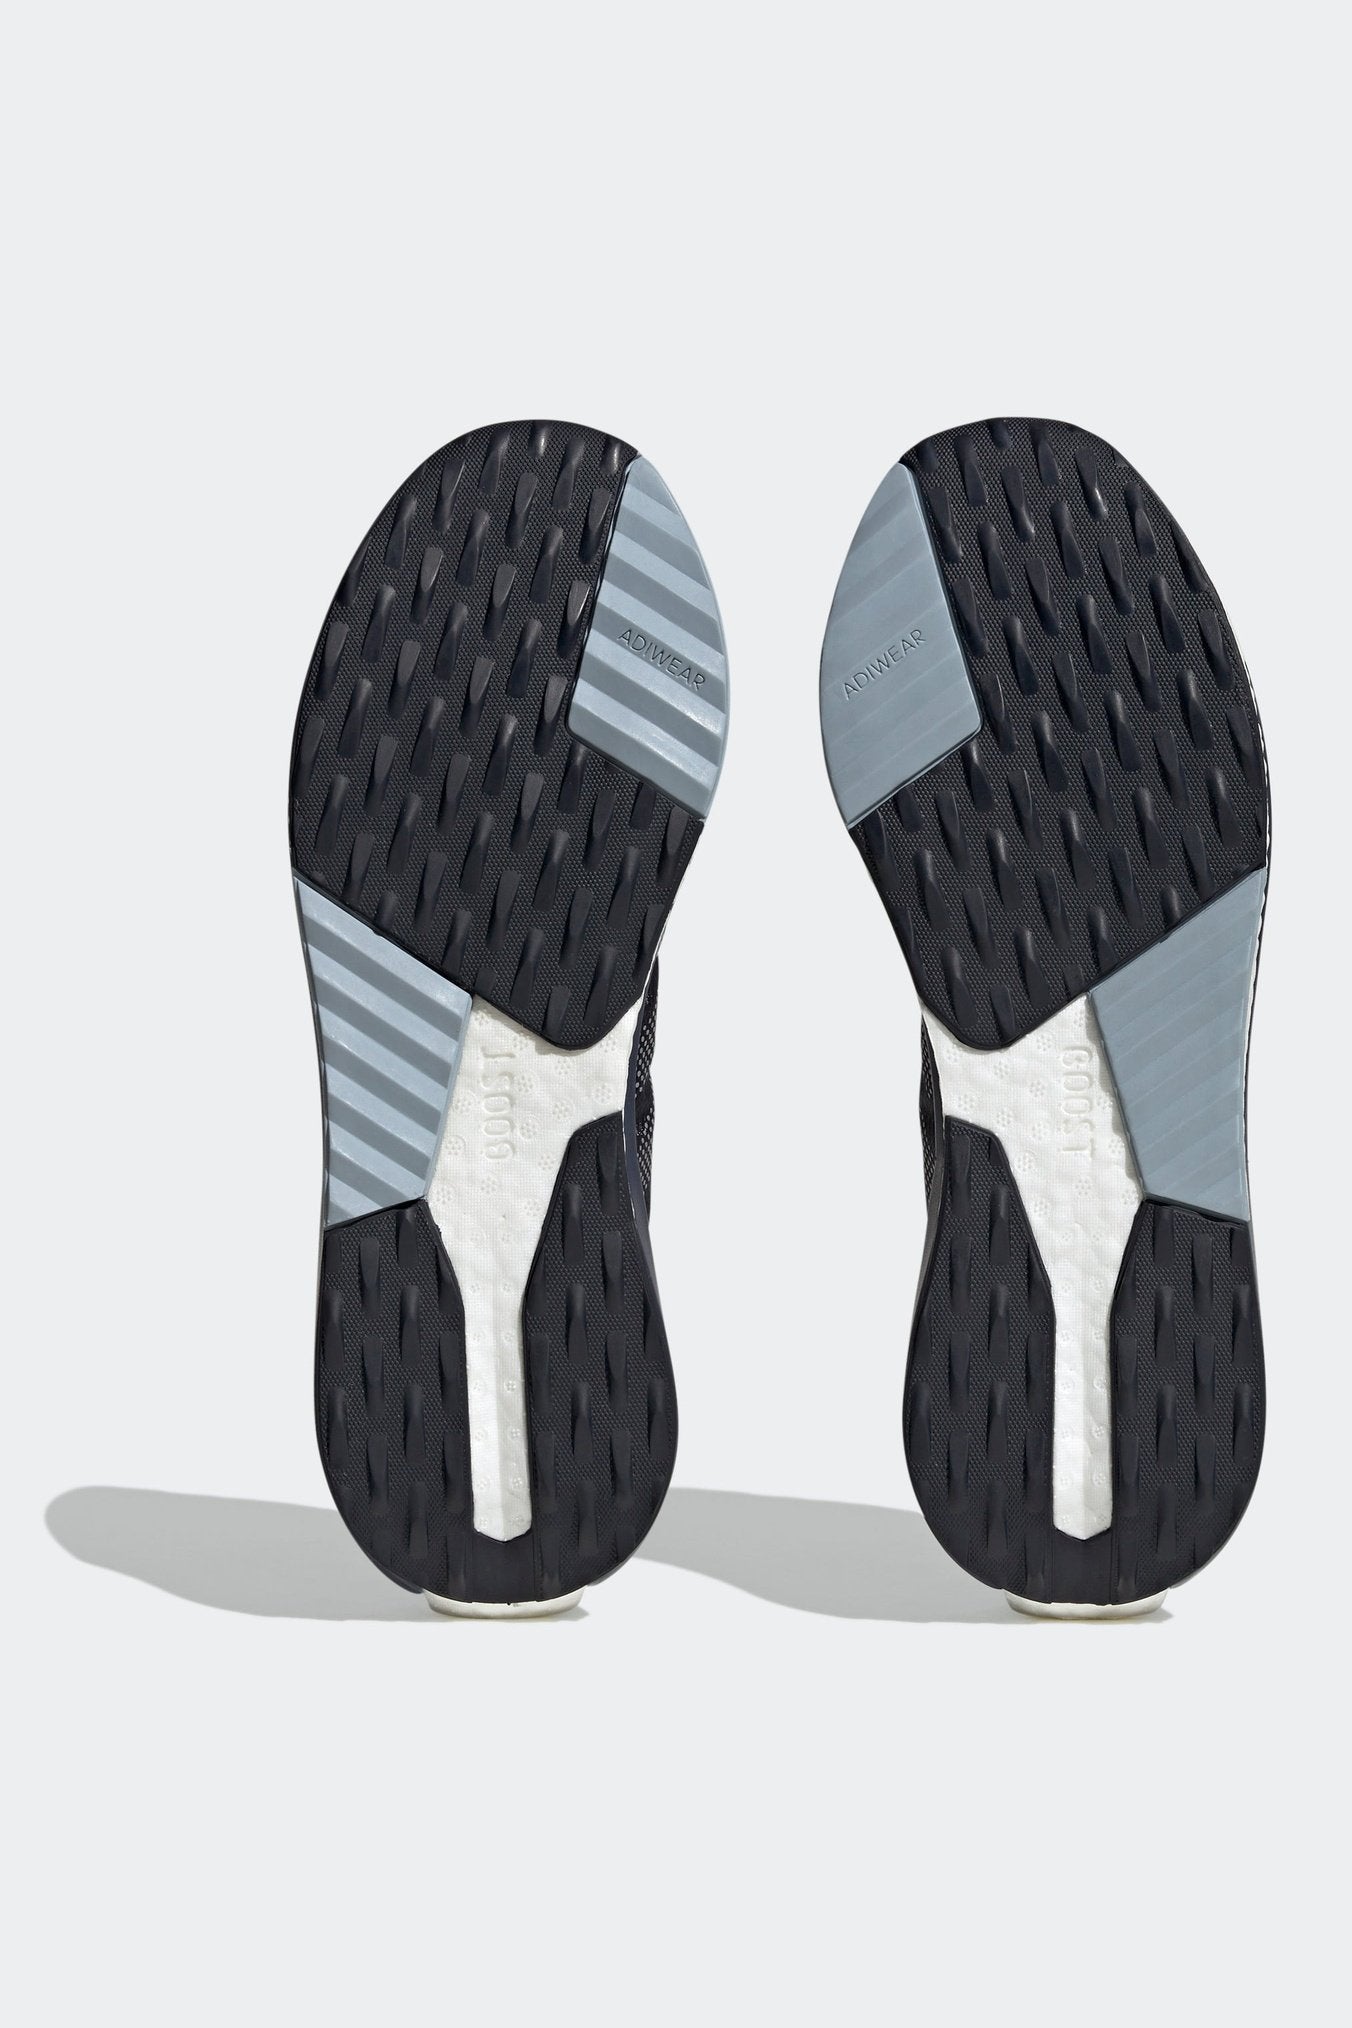 ADIDAS - נעלי ספורט לגברים AVRYN בצבע שחור - MASHBIR//365